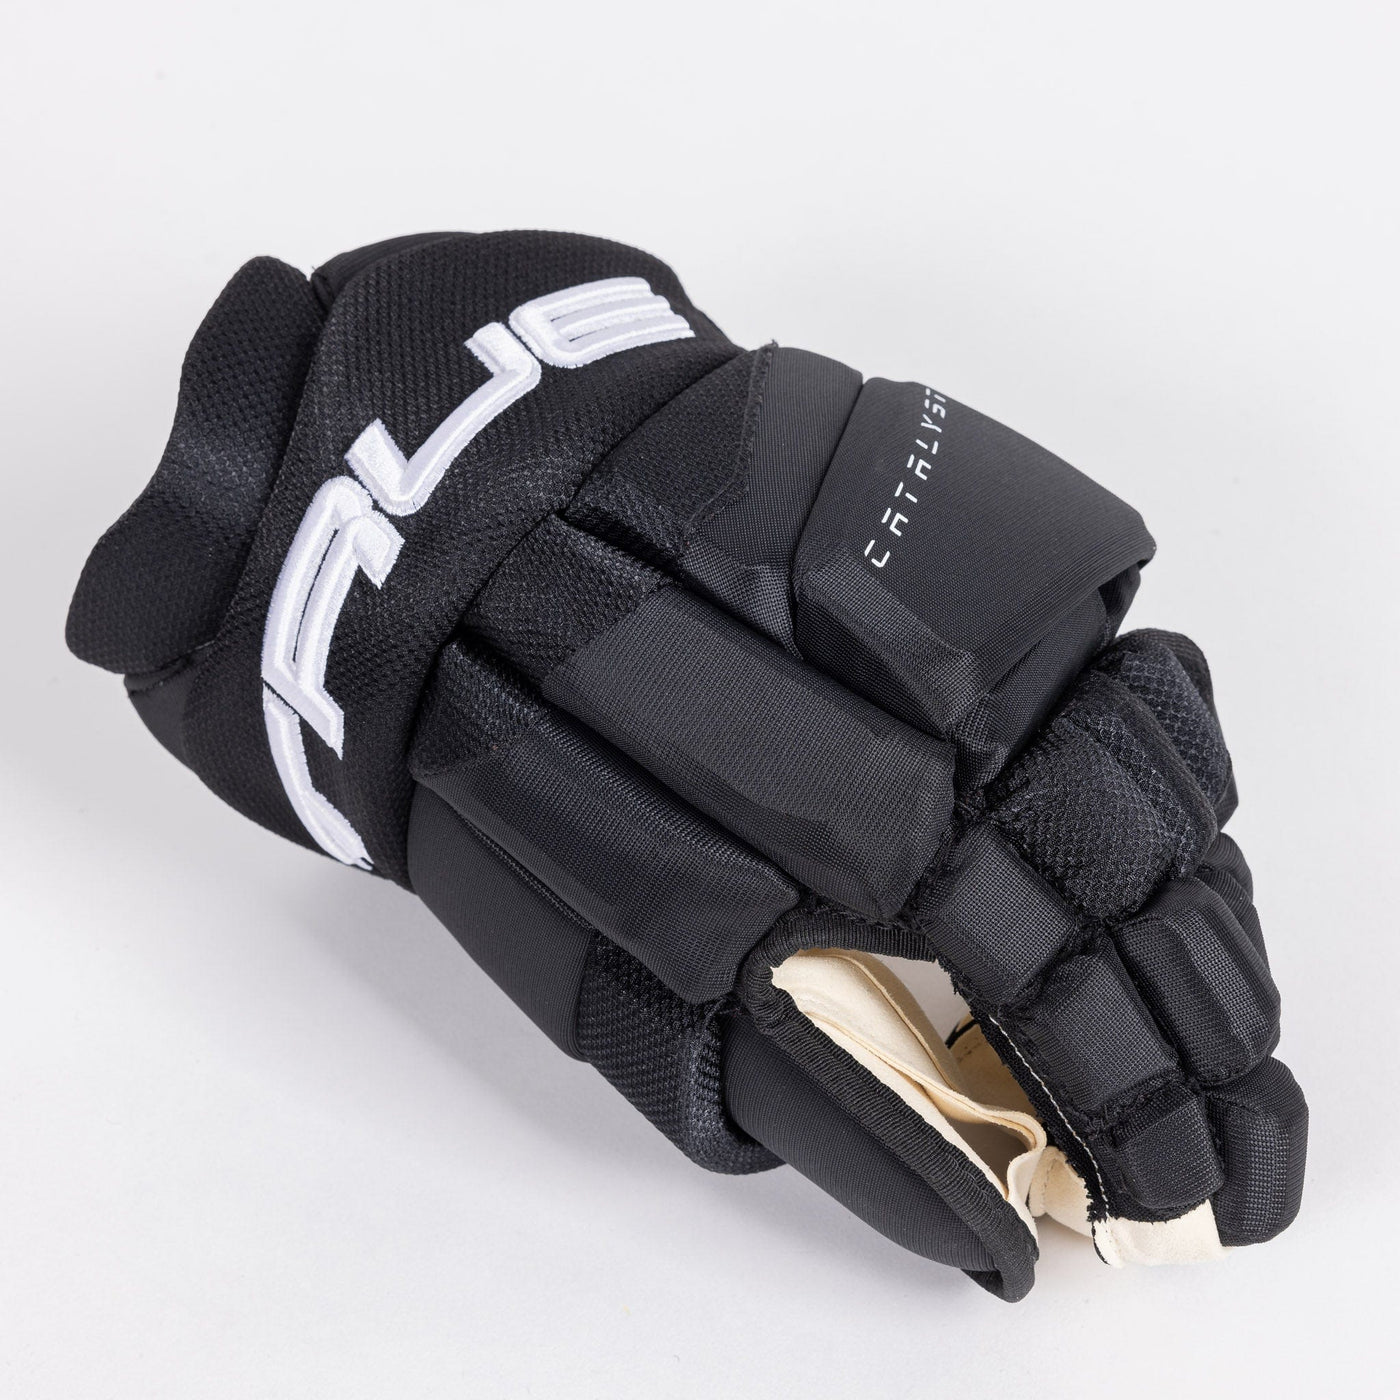 TRUE Catalyst Pro Stock Senior Hockey Glove - Montreal - The Hockey Shop Source For Sports